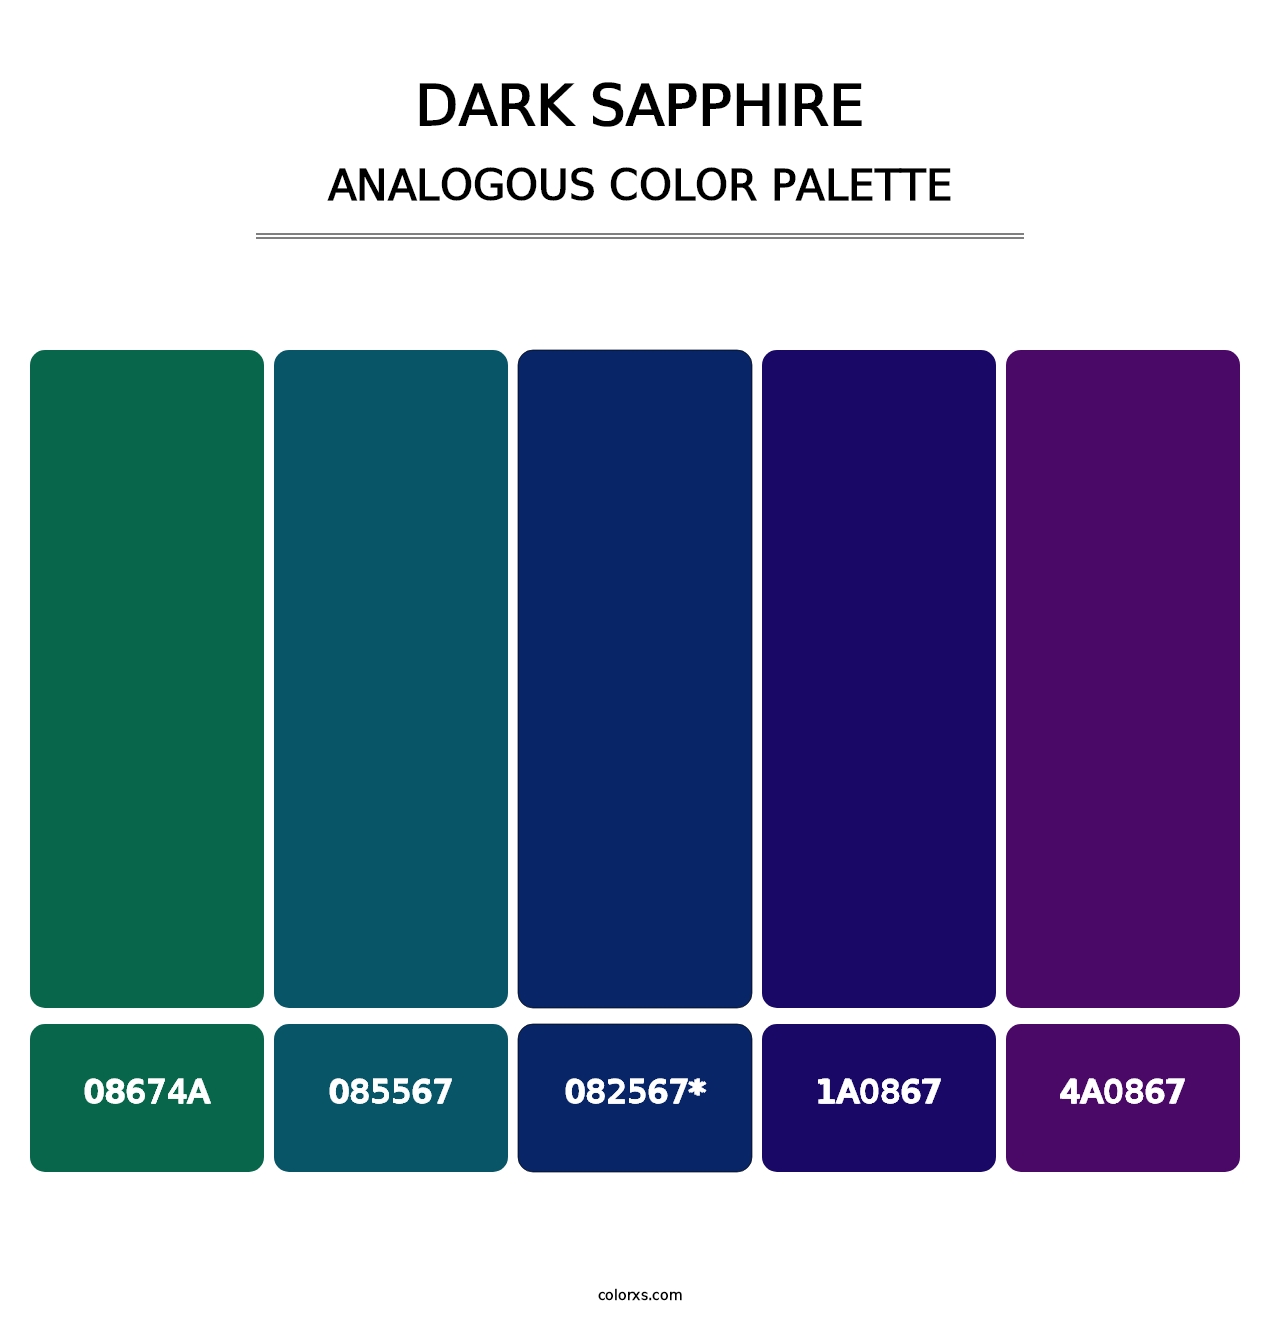 Dark Sapphire - Analogous Color Palette